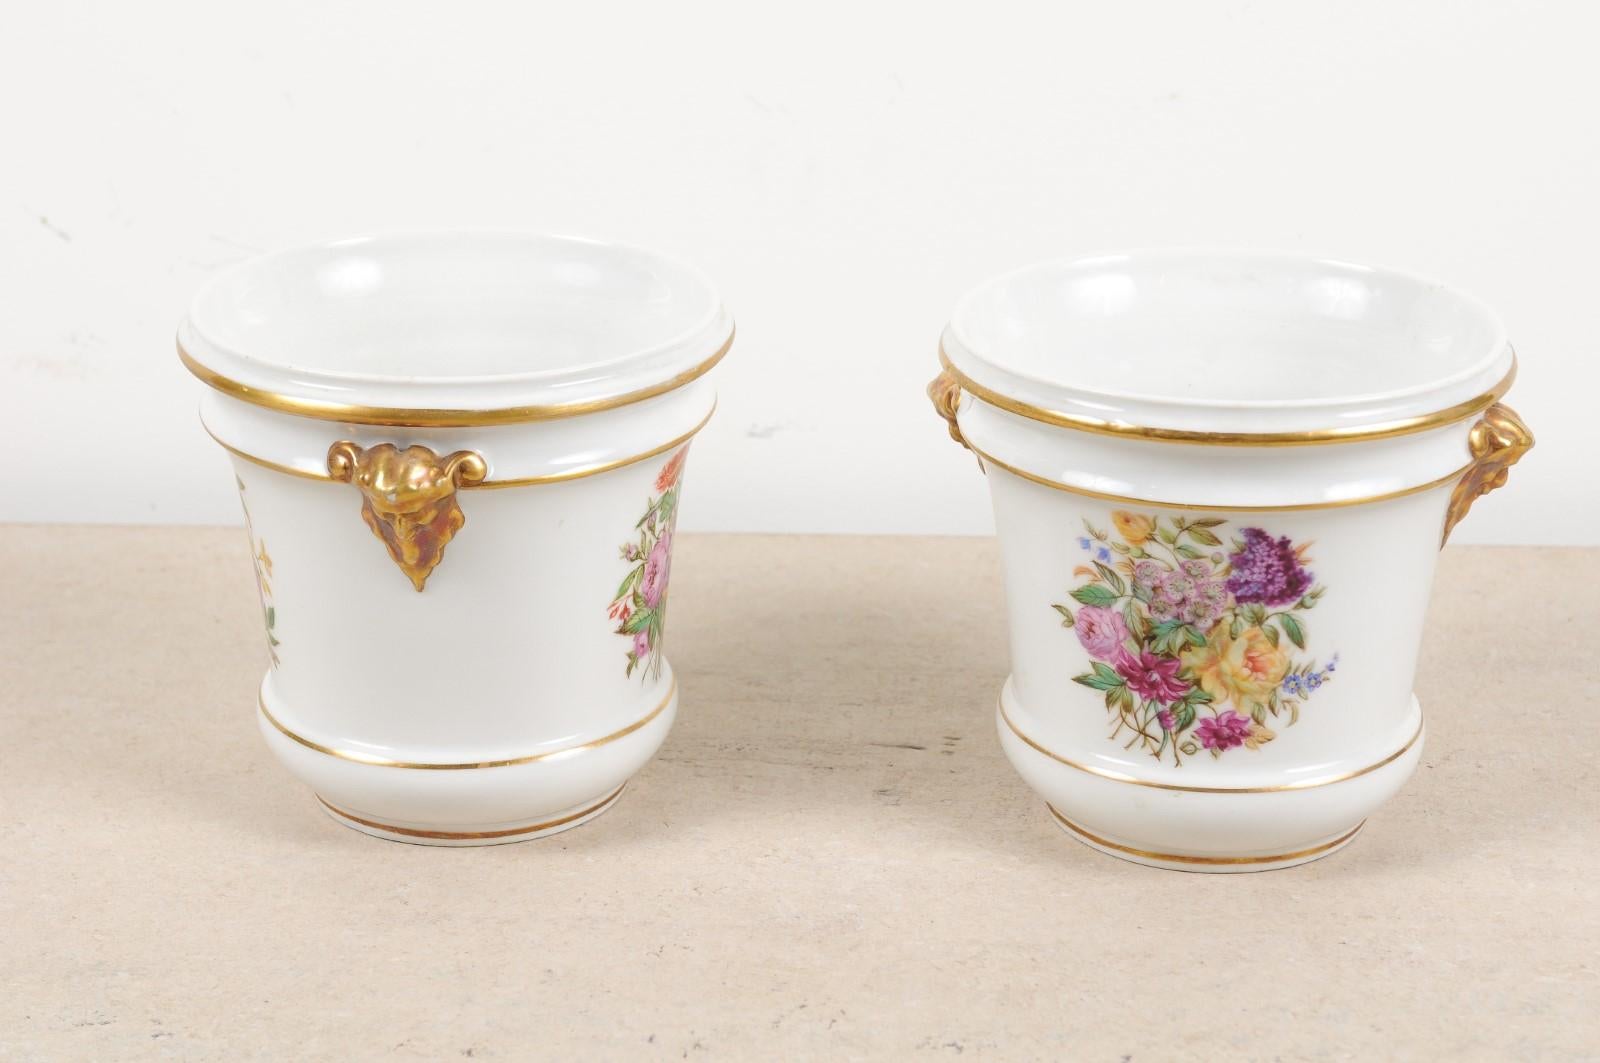 Pair of French Late 18th Century Paris Porcelain Cachepots with Floral Décor For Sale 7